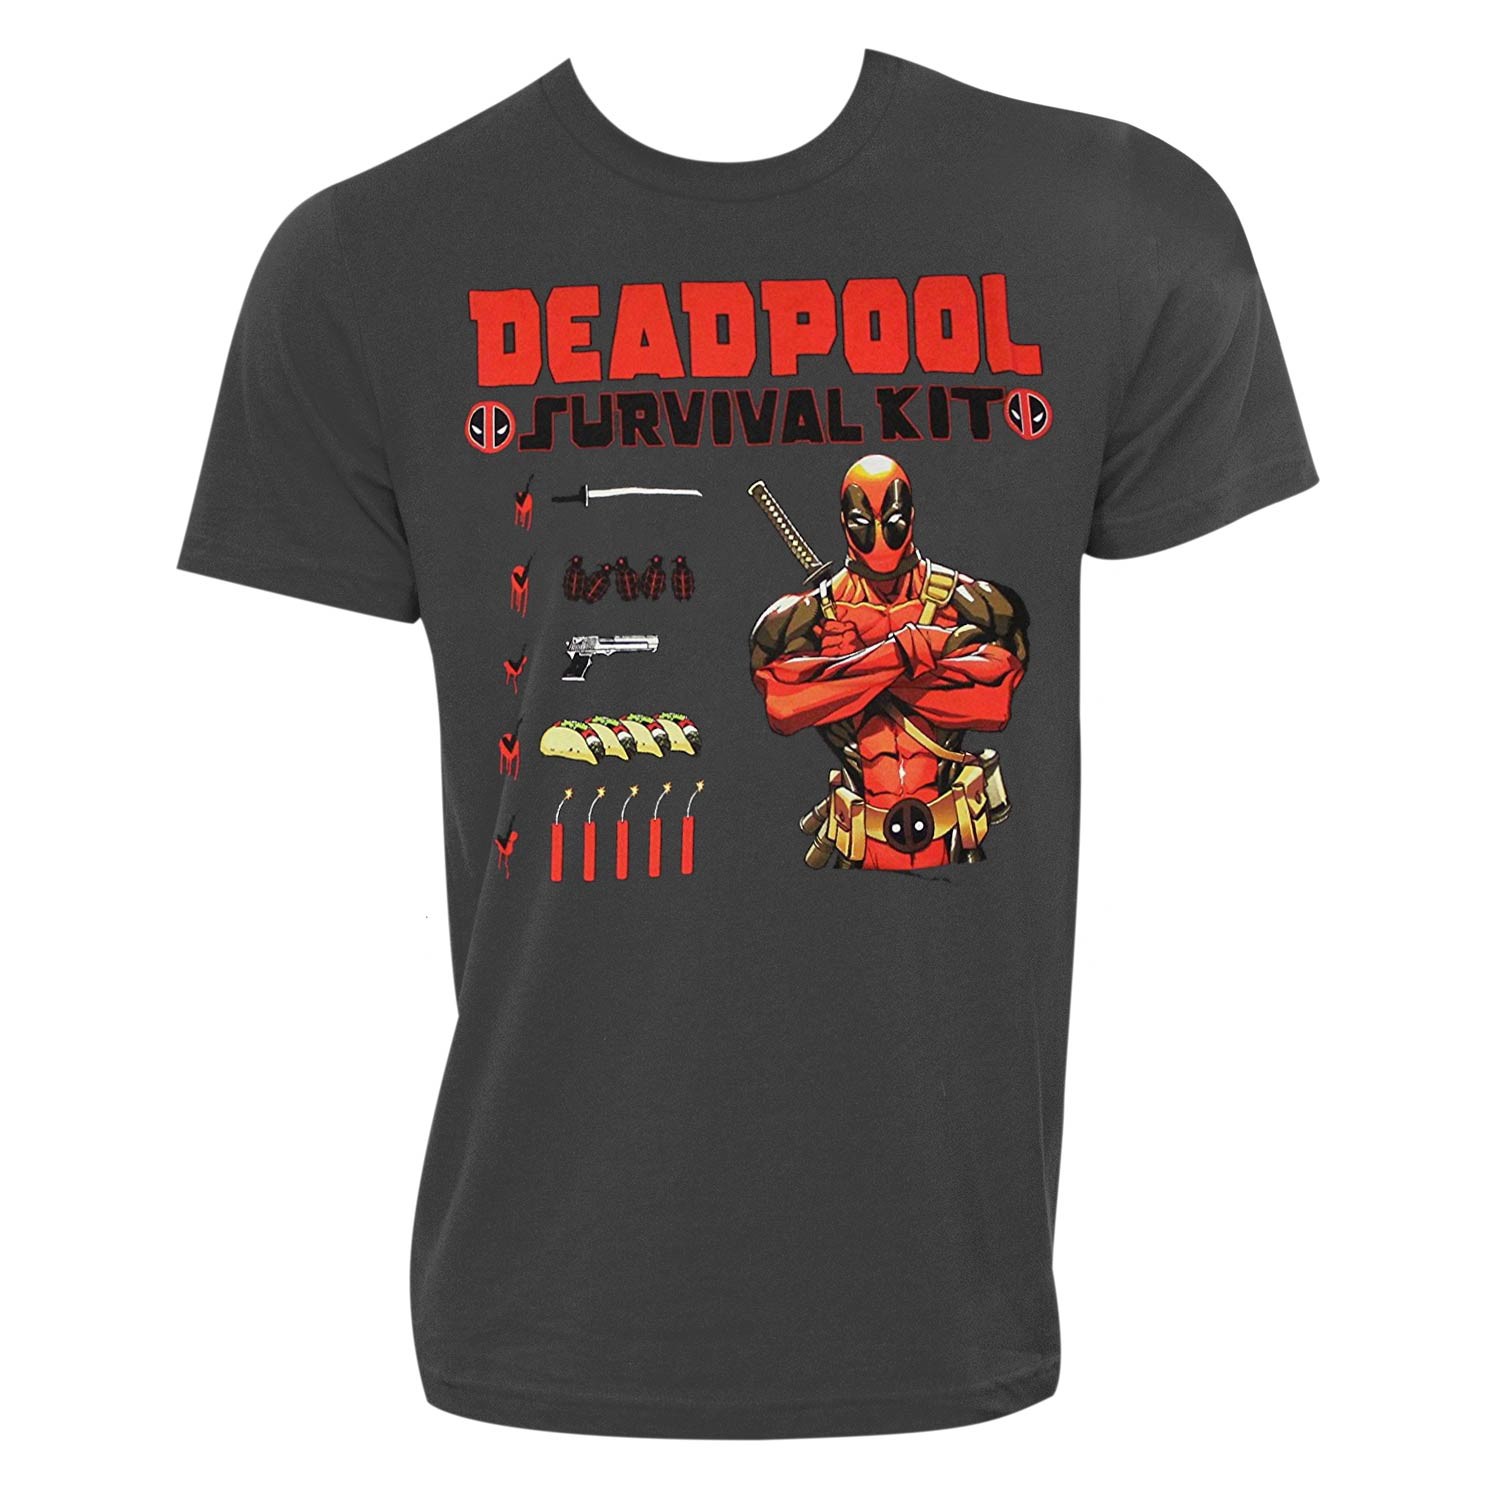 Deadpool Survival Kit Charcoal Tee Shirt